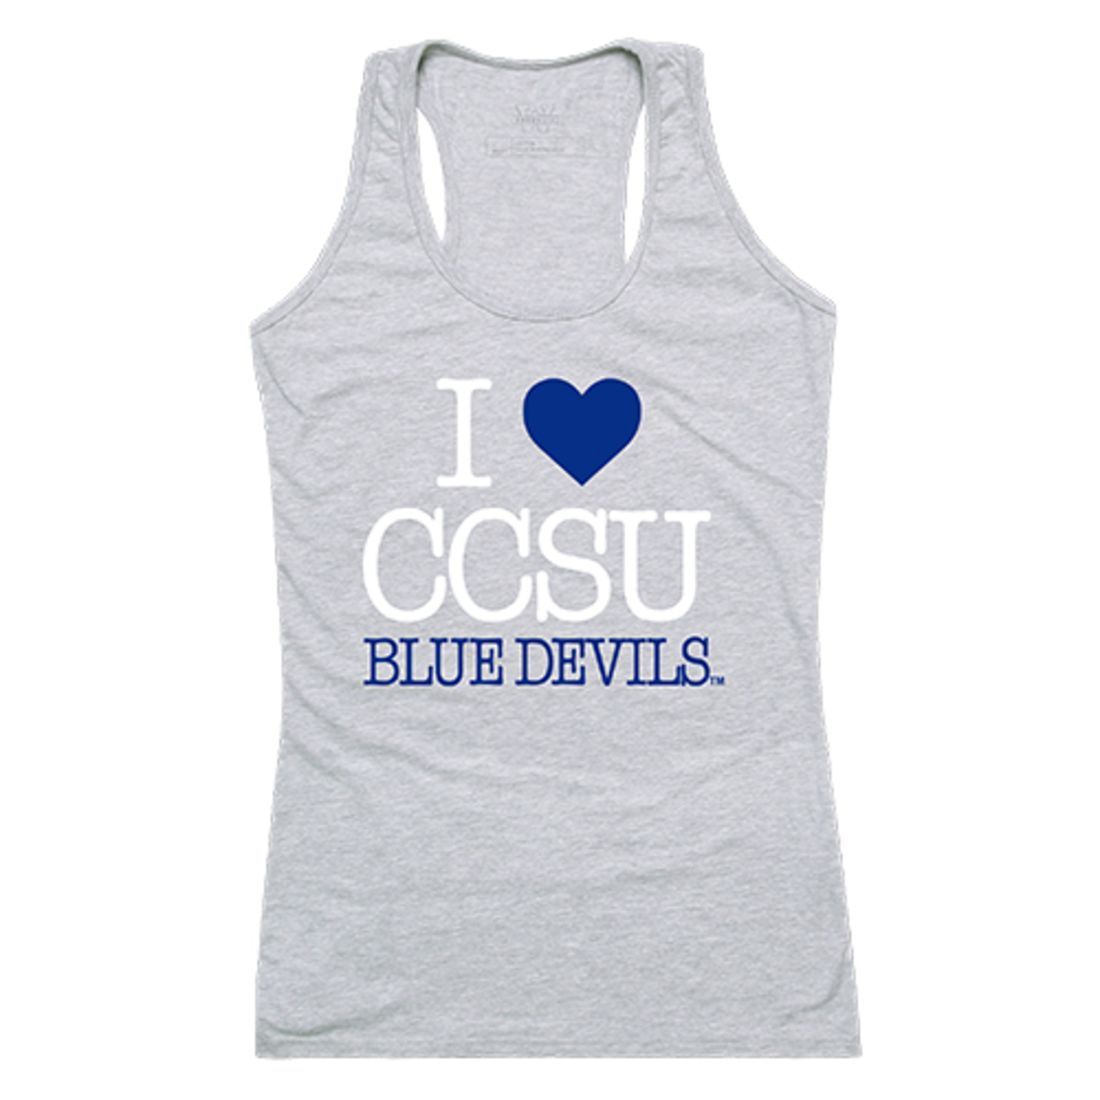 CCSU Central Connecticut State University Blue Devils Womens Love Tank Top Tee T-Shirt Heather Grey-Campus-Wardrobe